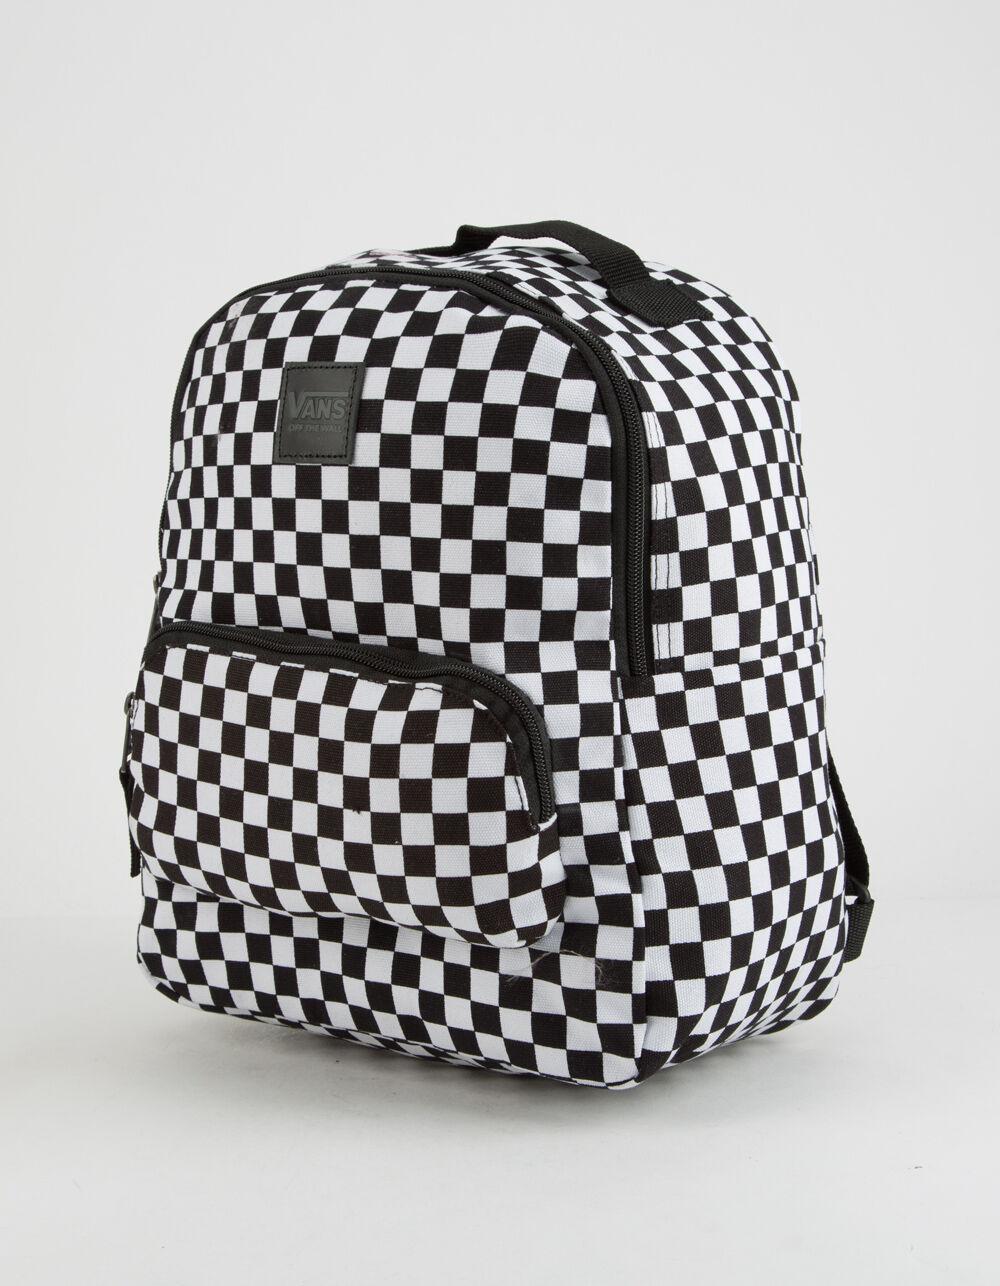 vans checkered backpack